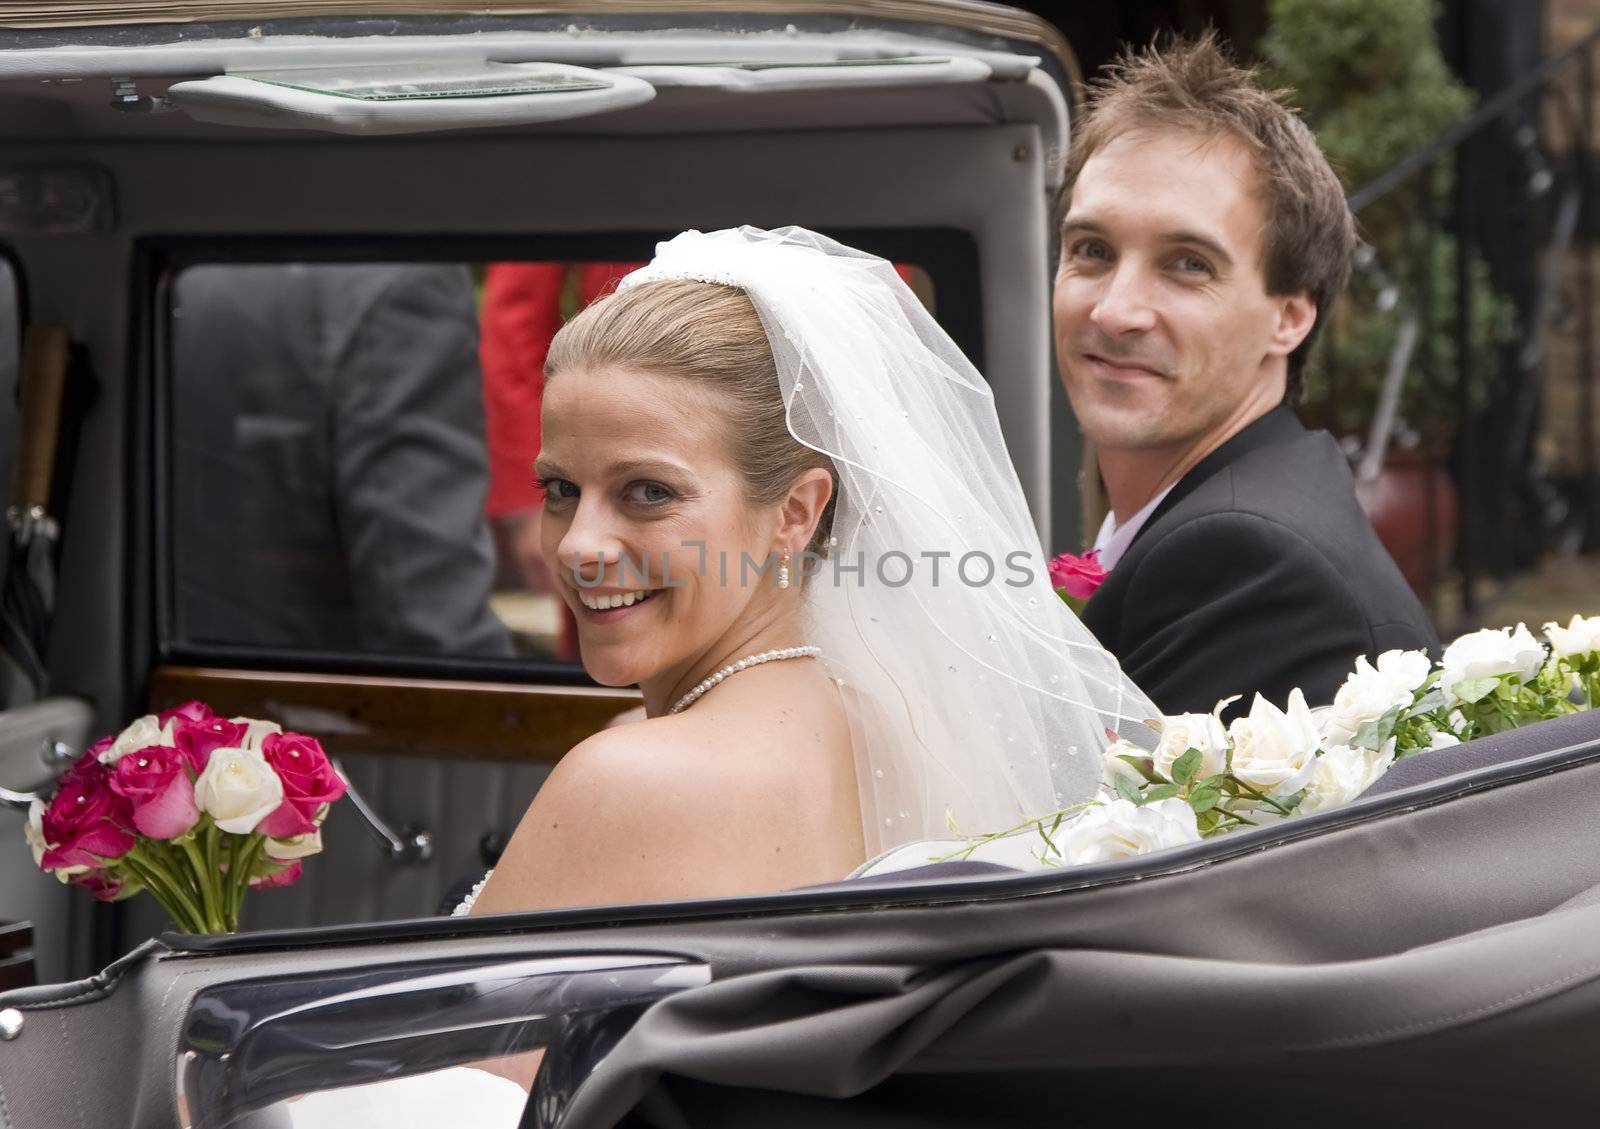 Bride and groom arrive at reception in vintage wedding car